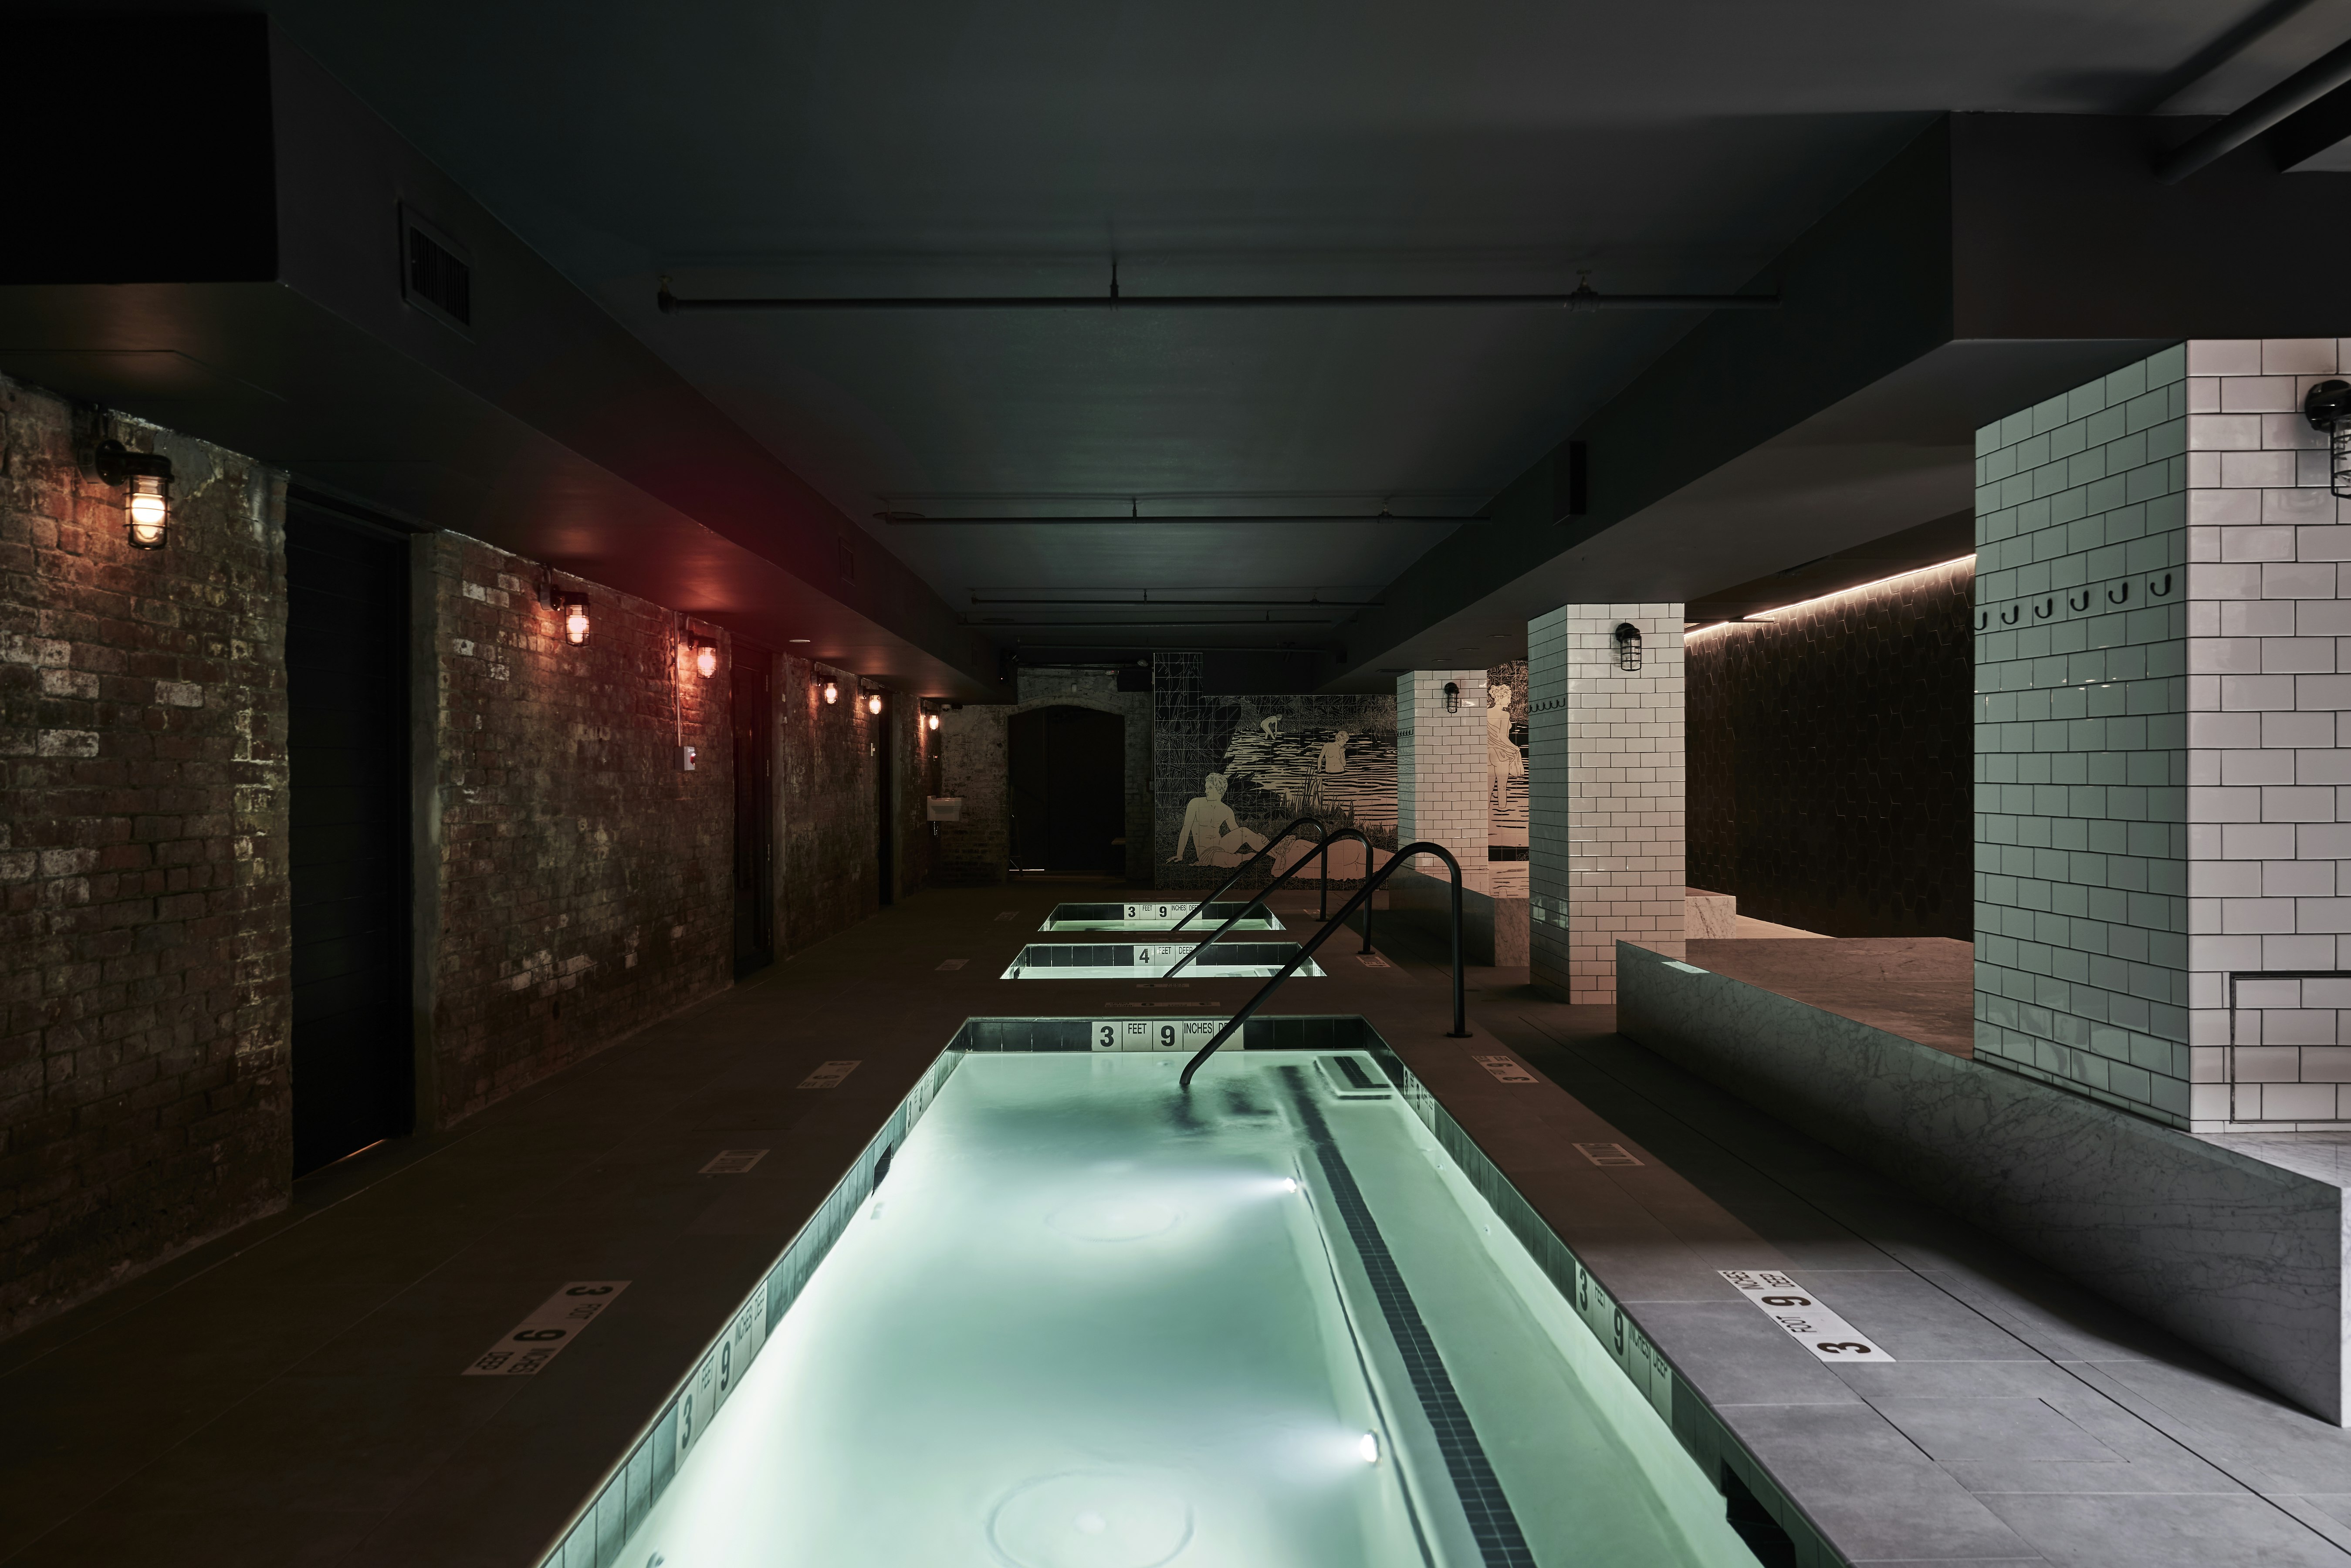 Bathhouse pool rooms